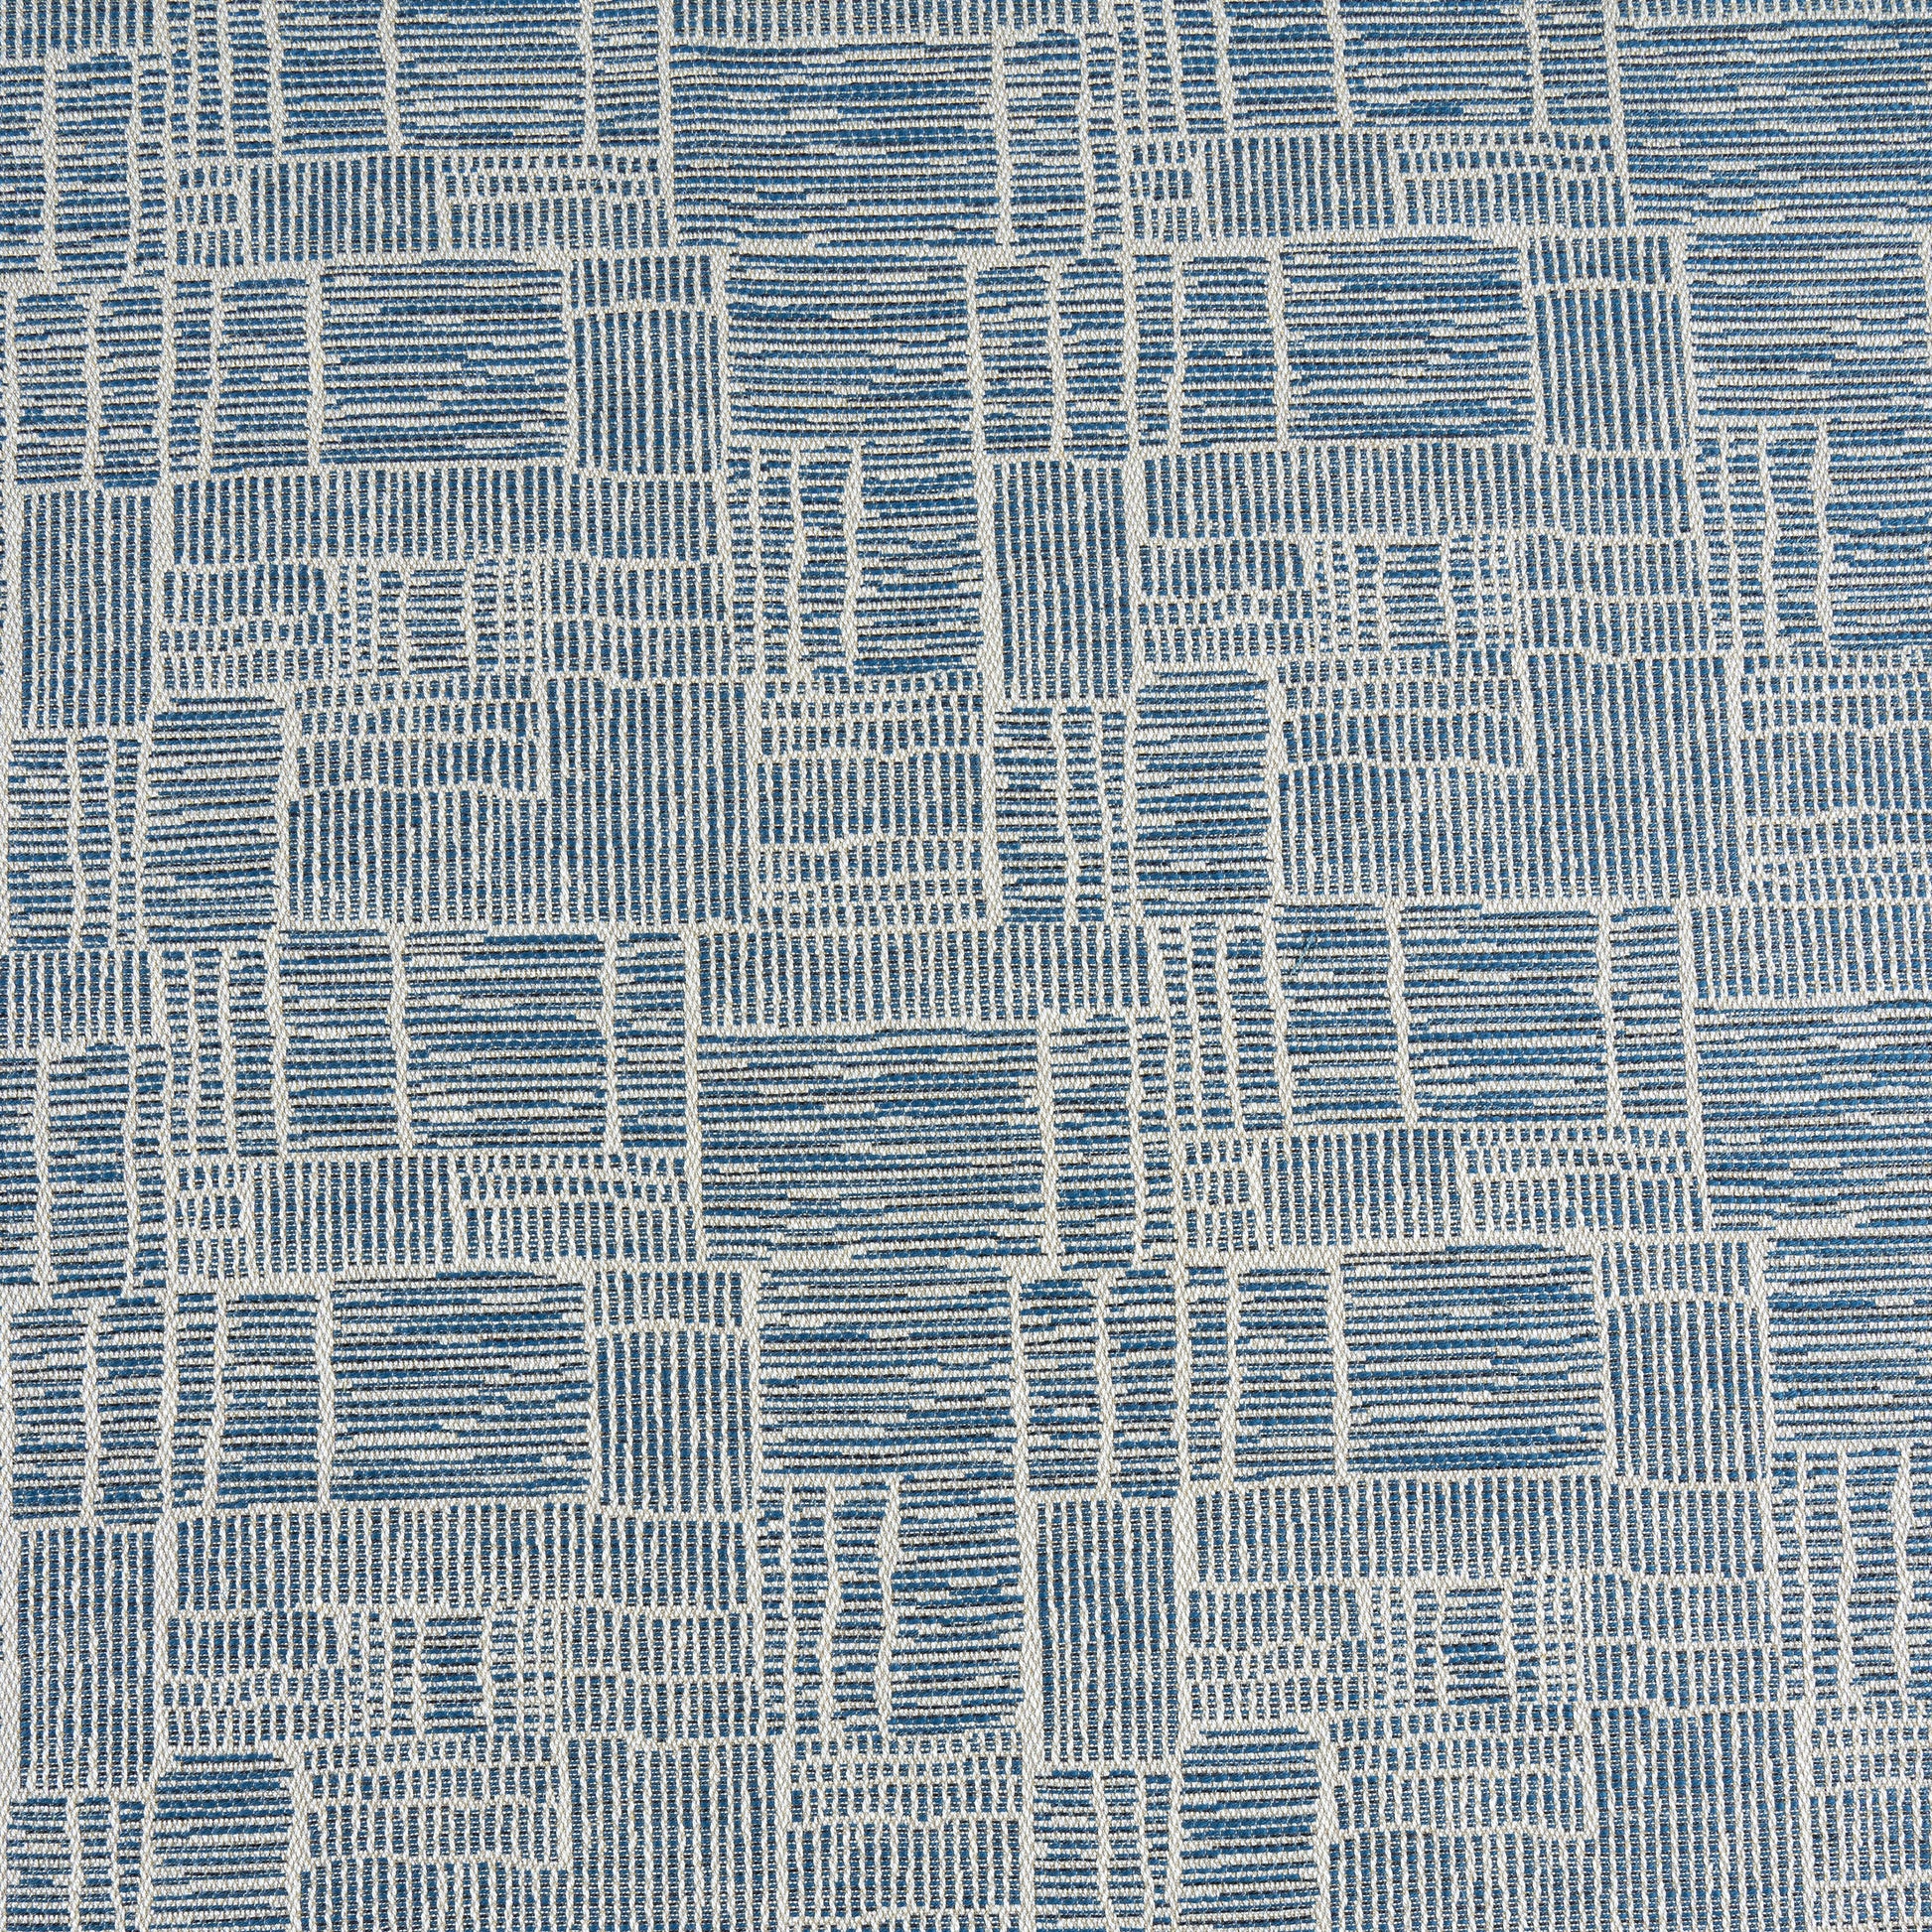 Purchase Thibaut Fabric Item# W8124 pattern name Vario color Marine